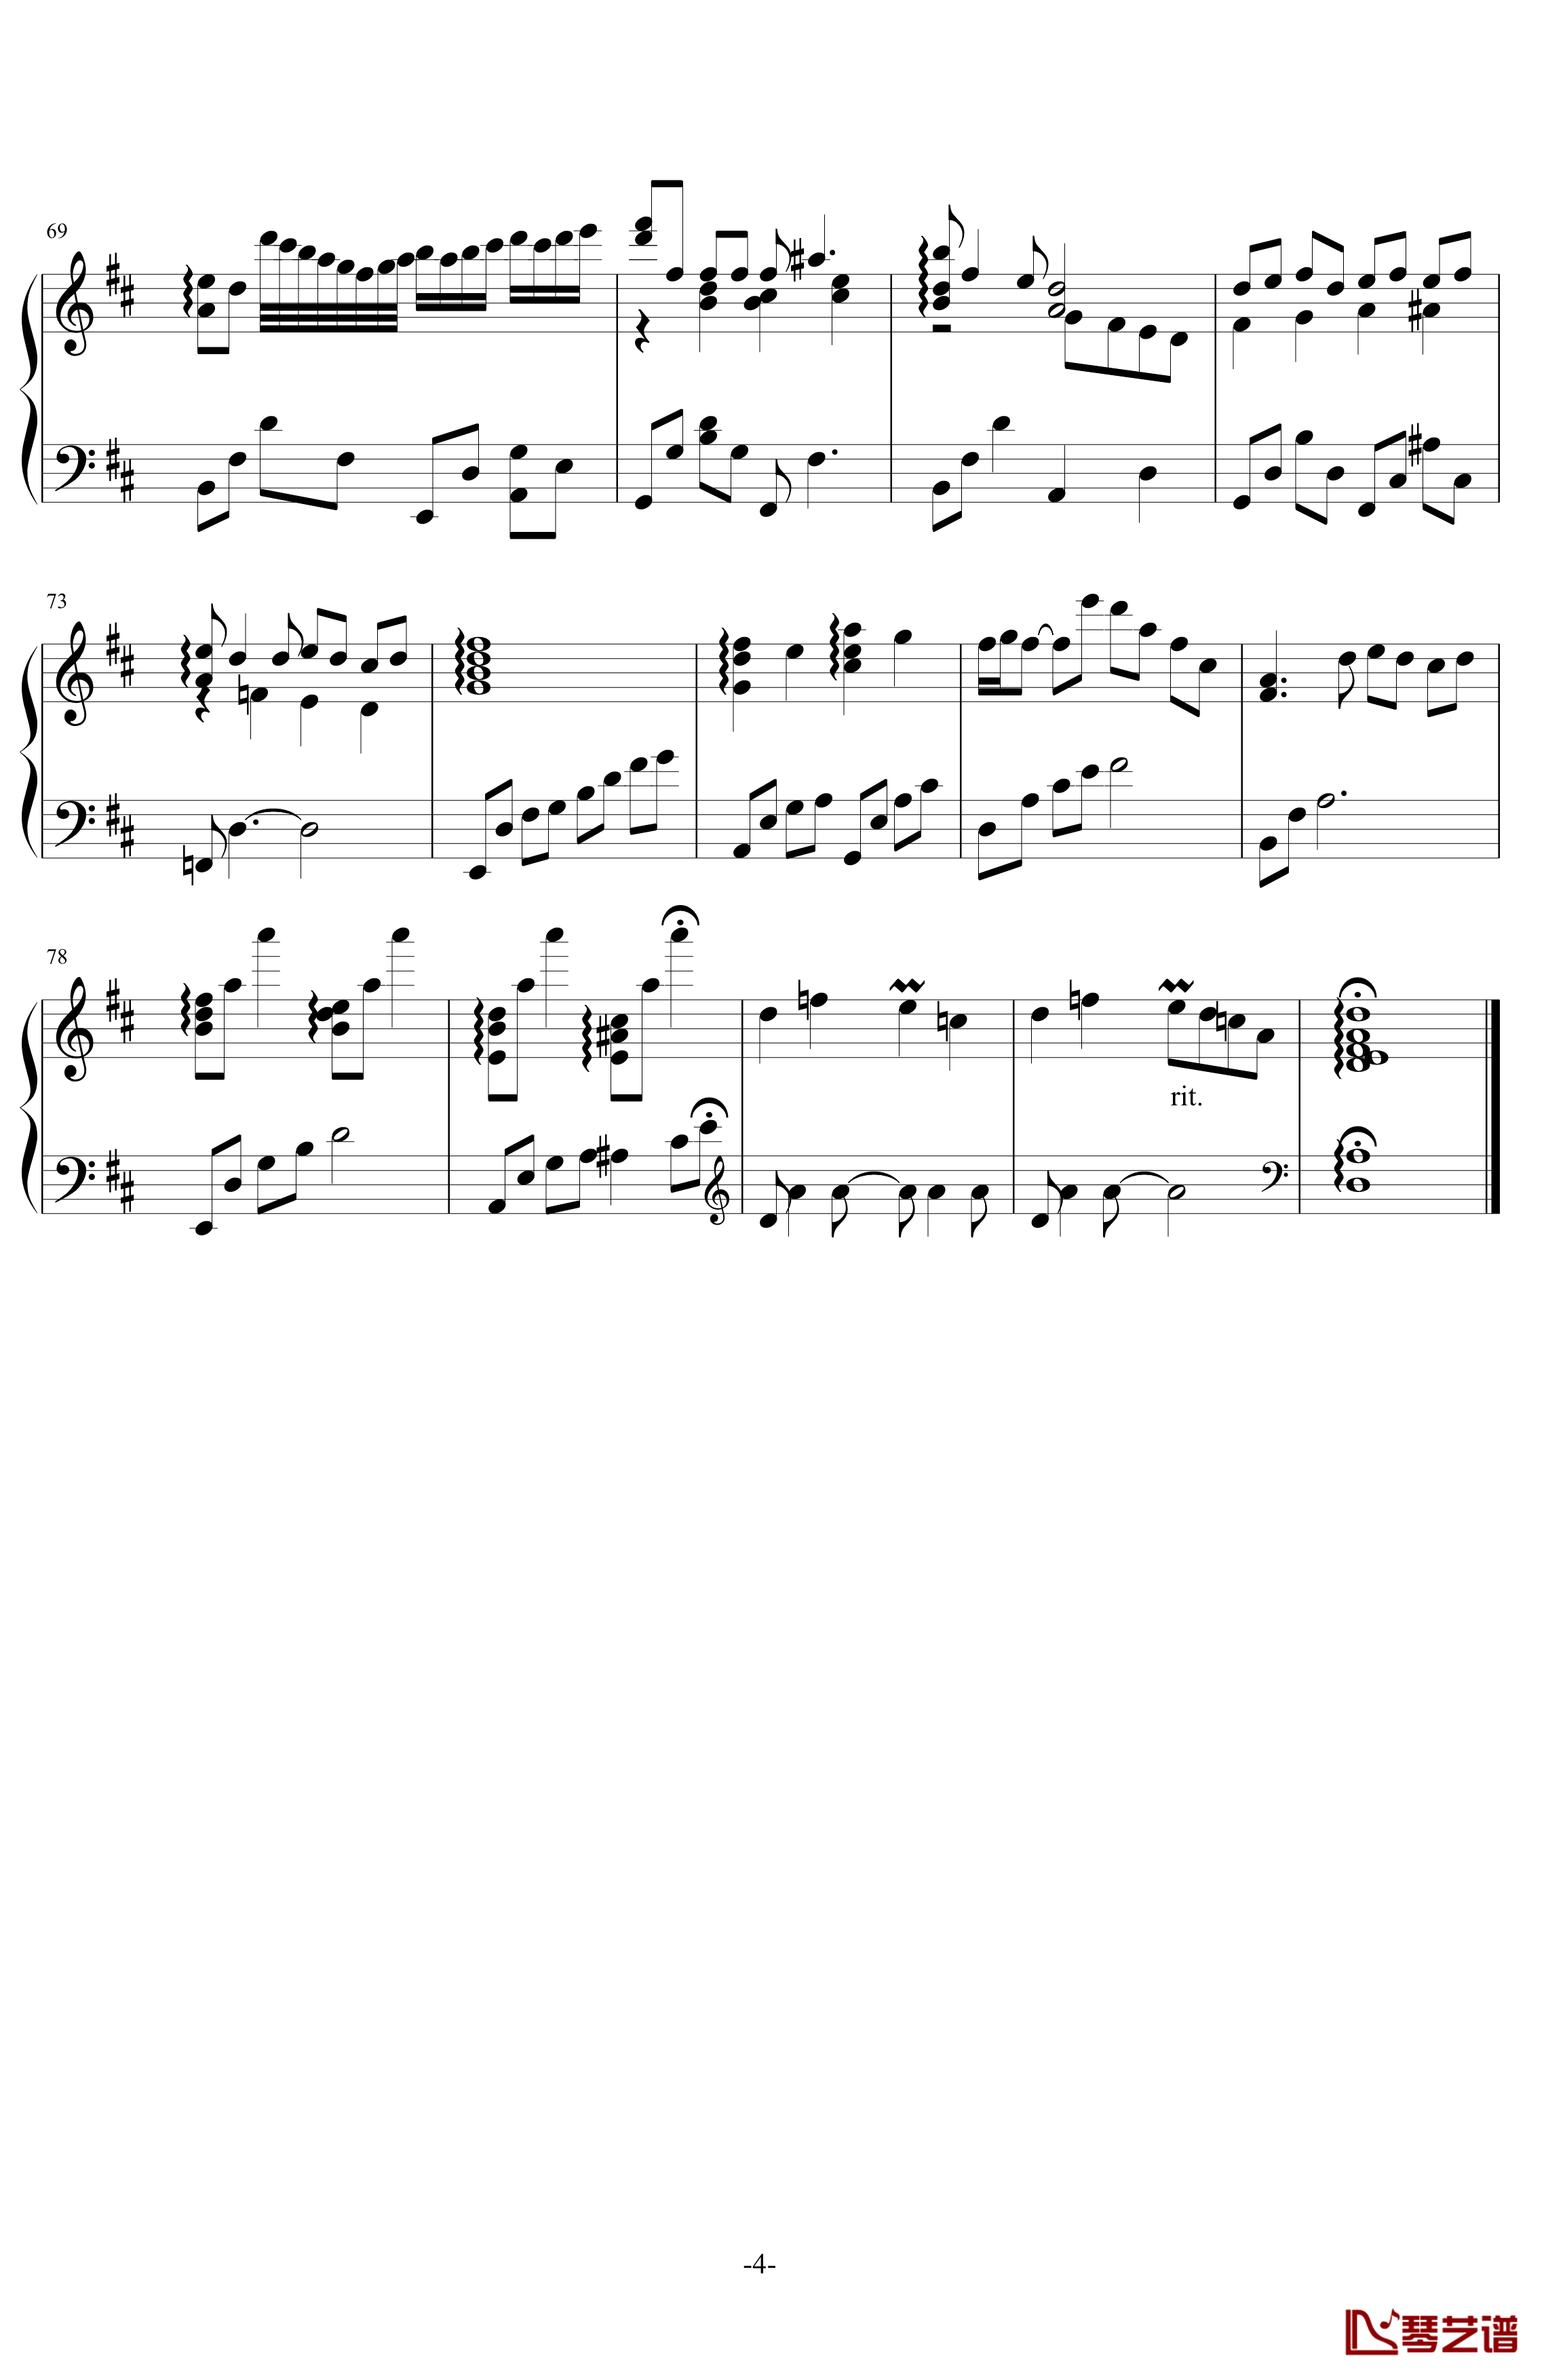 Nausicaa of the valley of the wind钢琴谱-久石让4